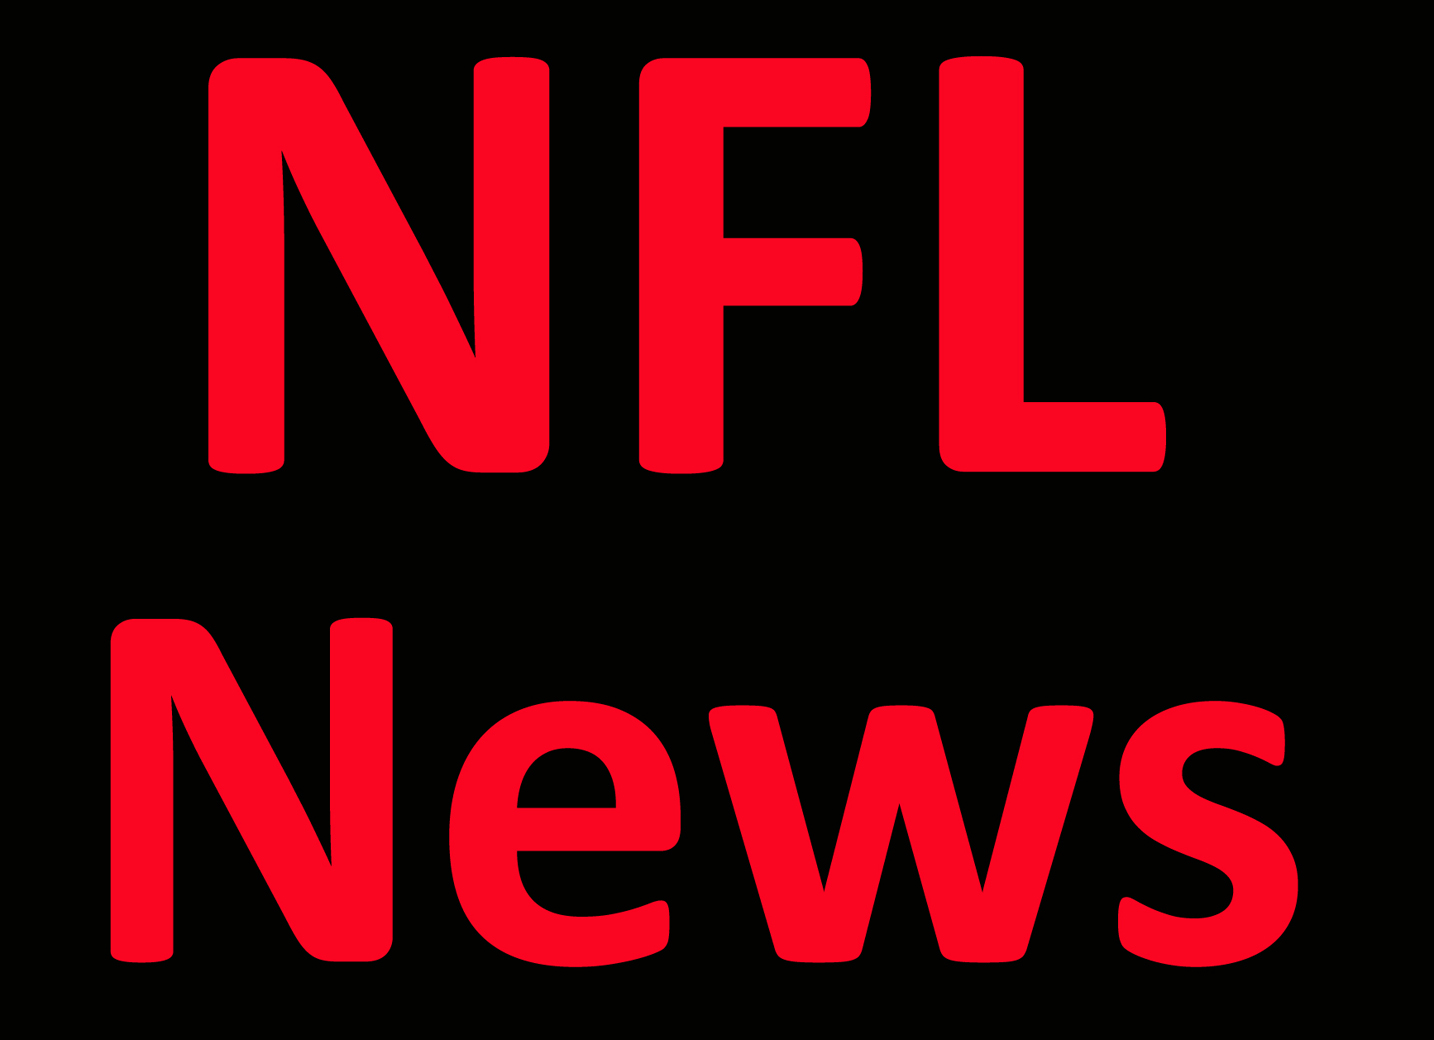 NFL News: Jets’ historically bad offense raises heat on rookie coordinator Per Report